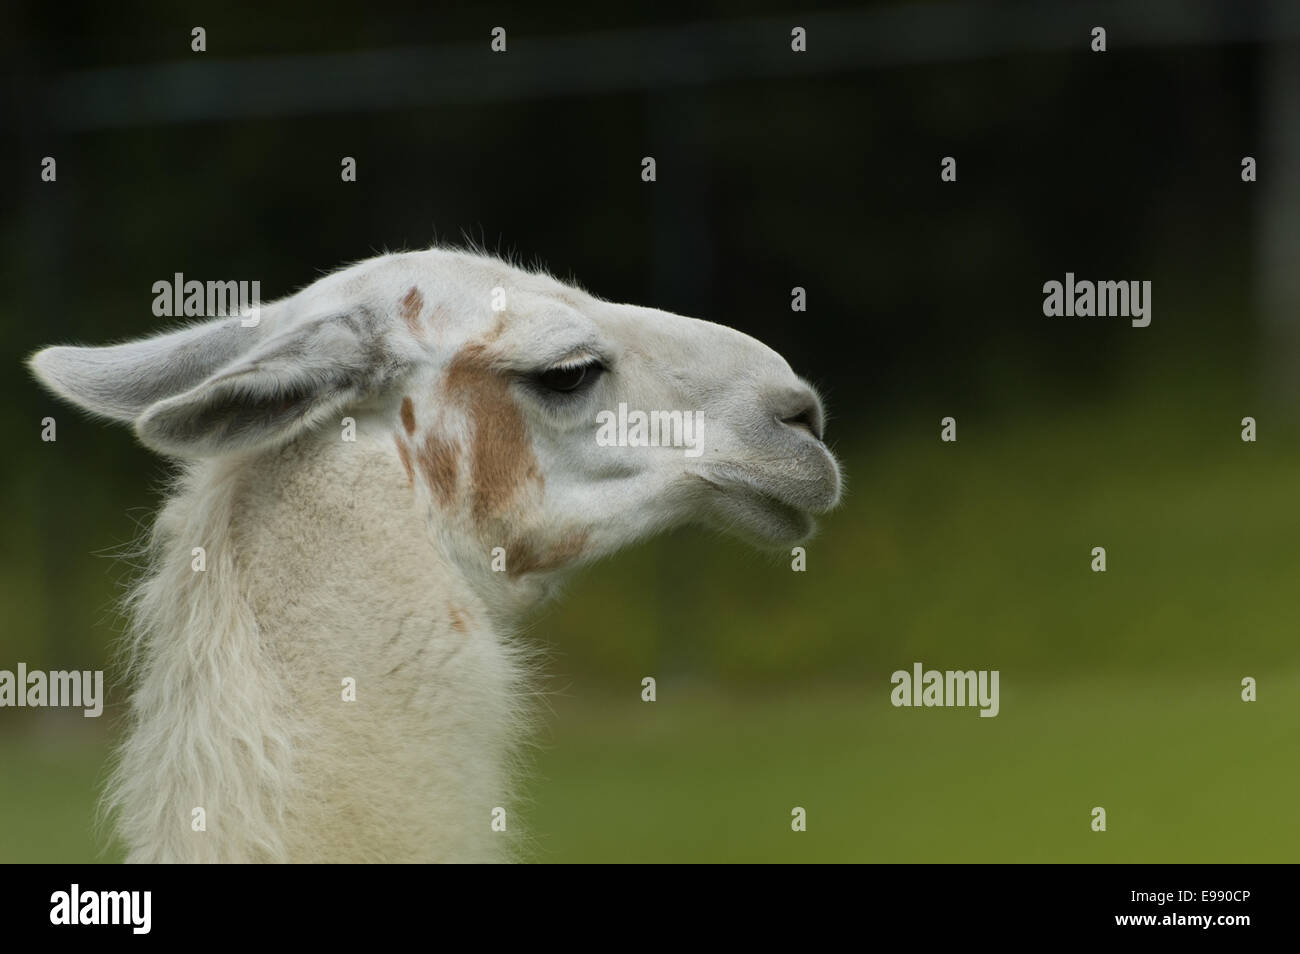 A close up the head of a llama. Stock Photo